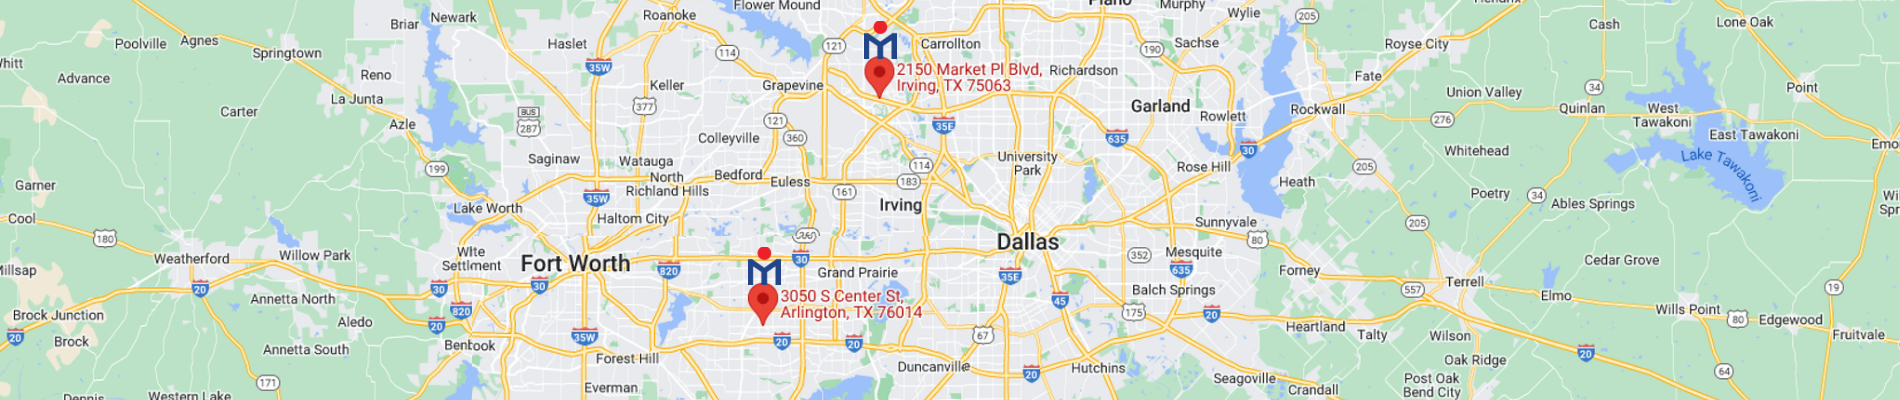 map location to Emis Health Minimally Invasive Vascular Specialists Dallas Texas Arlington